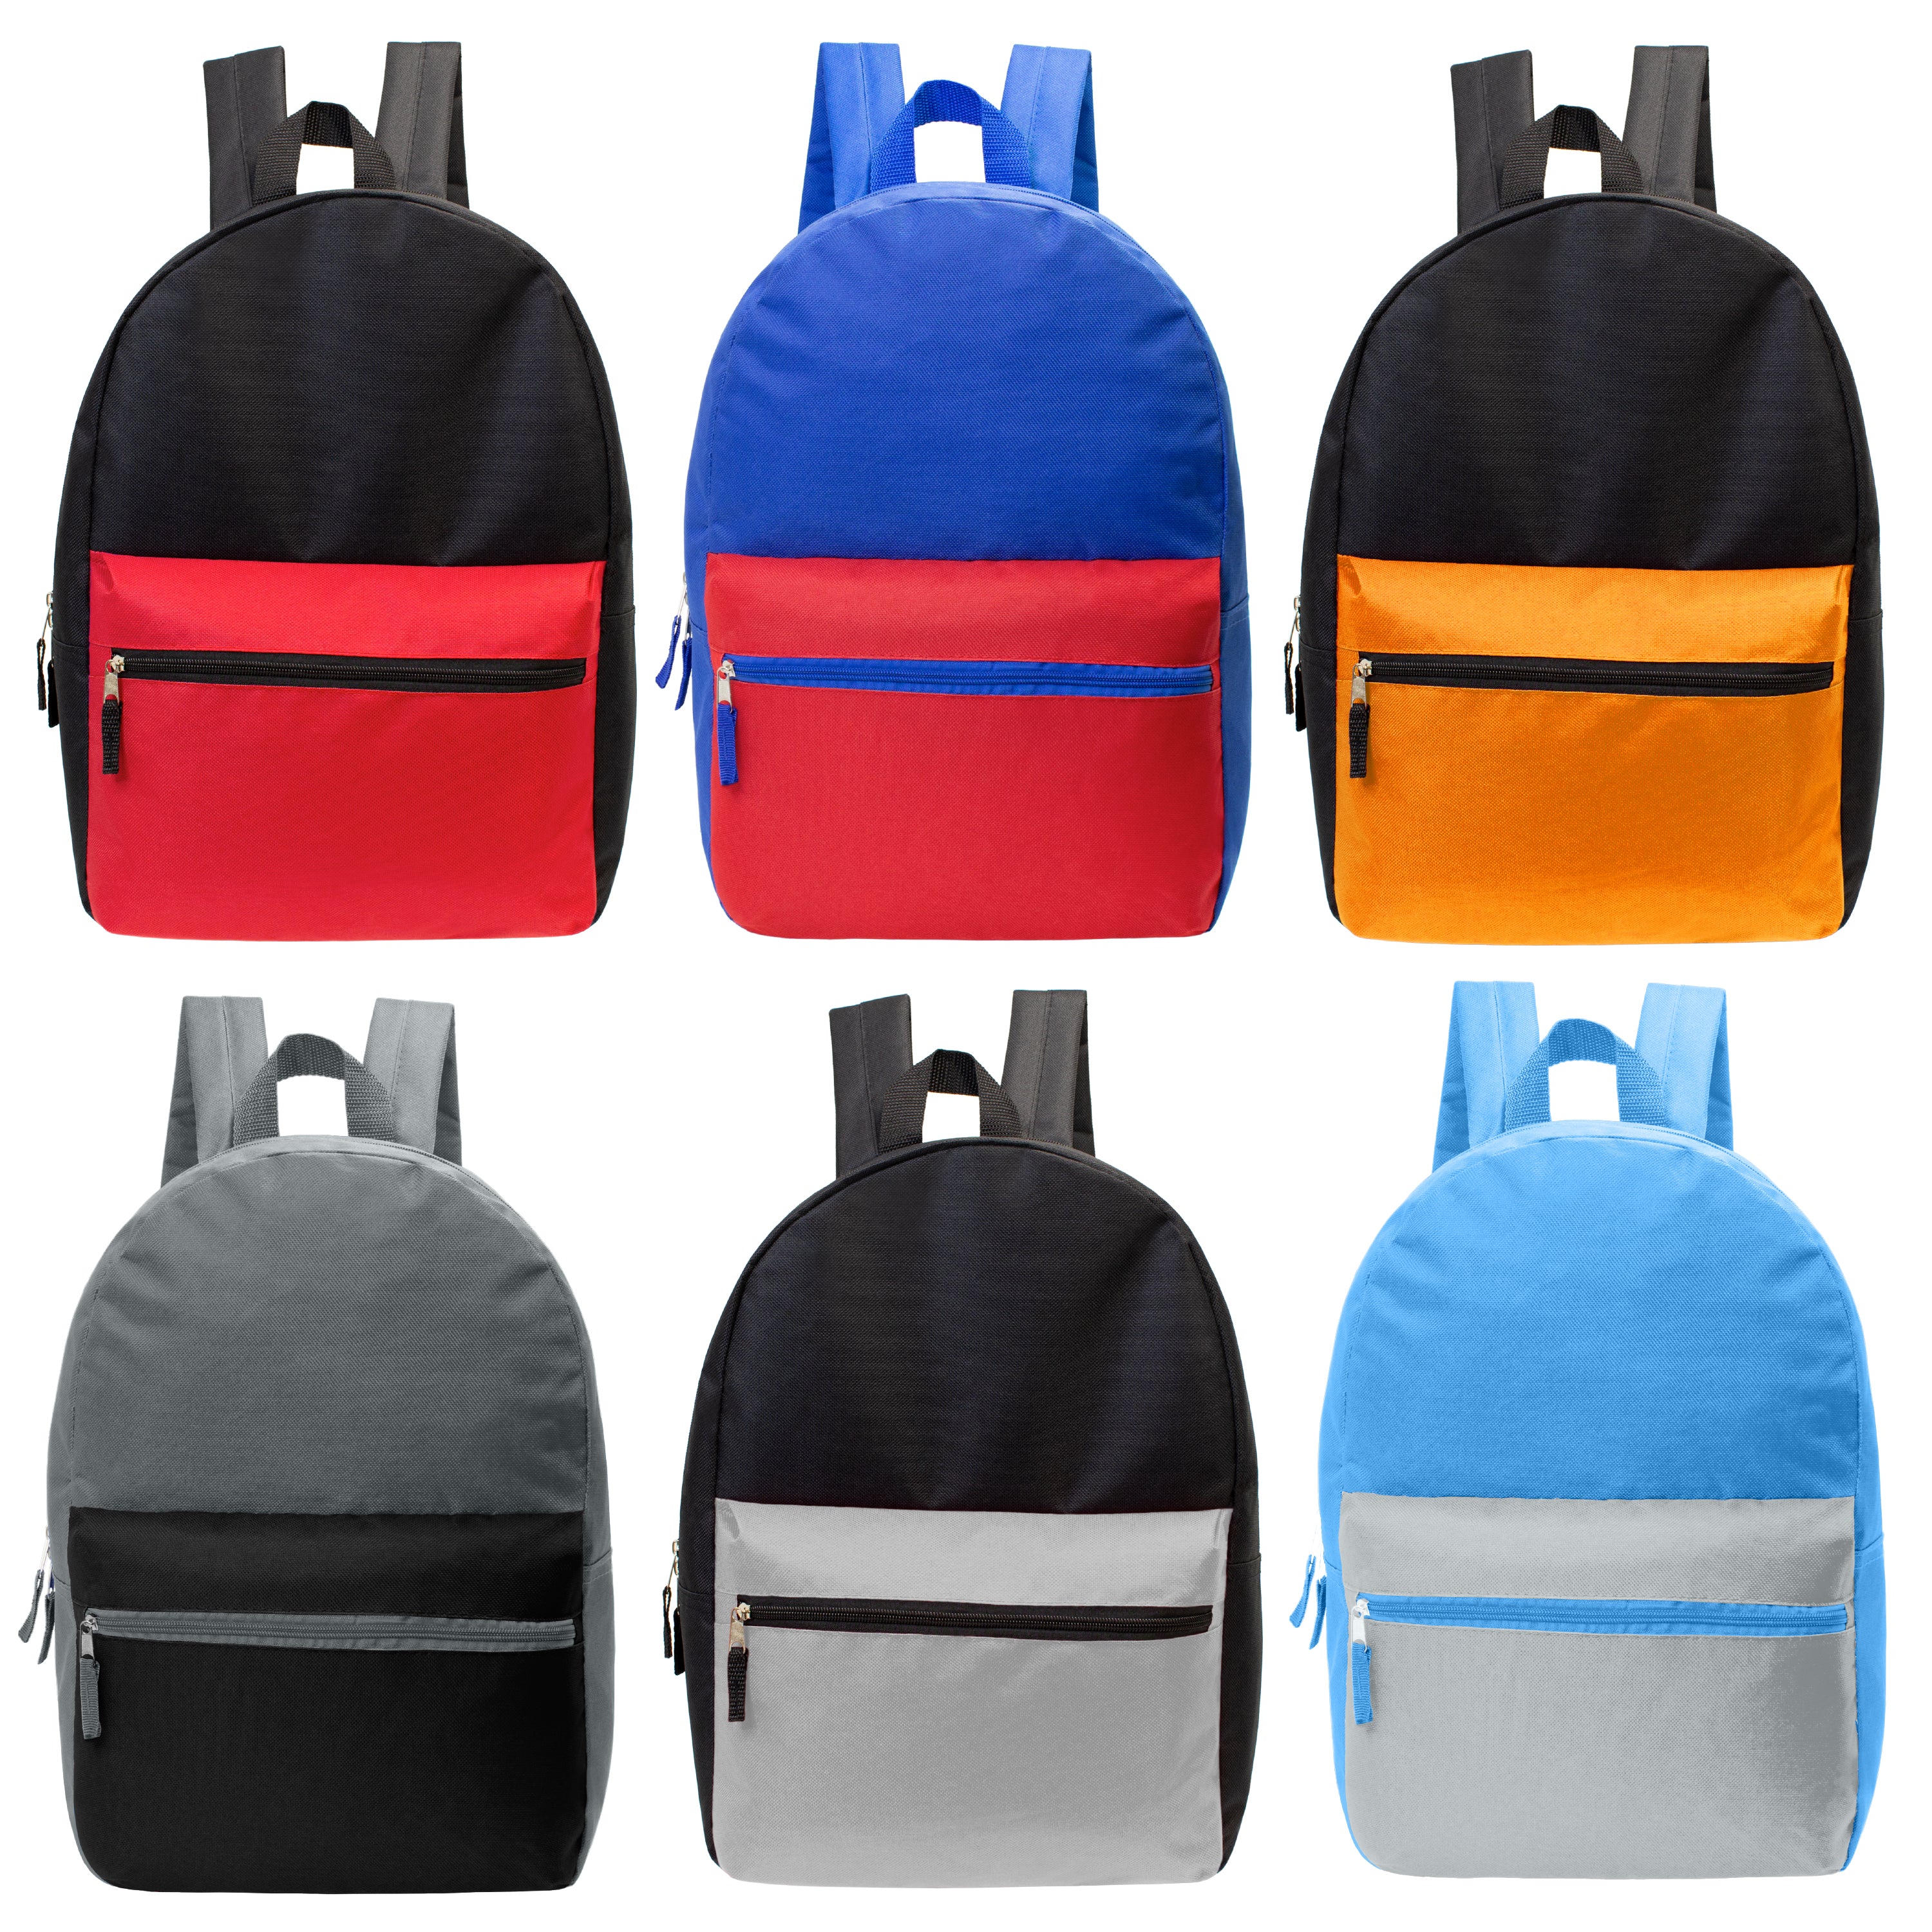 boys wholesale backpacks in bulk 2 tone colors SKU: BAPA-282-24